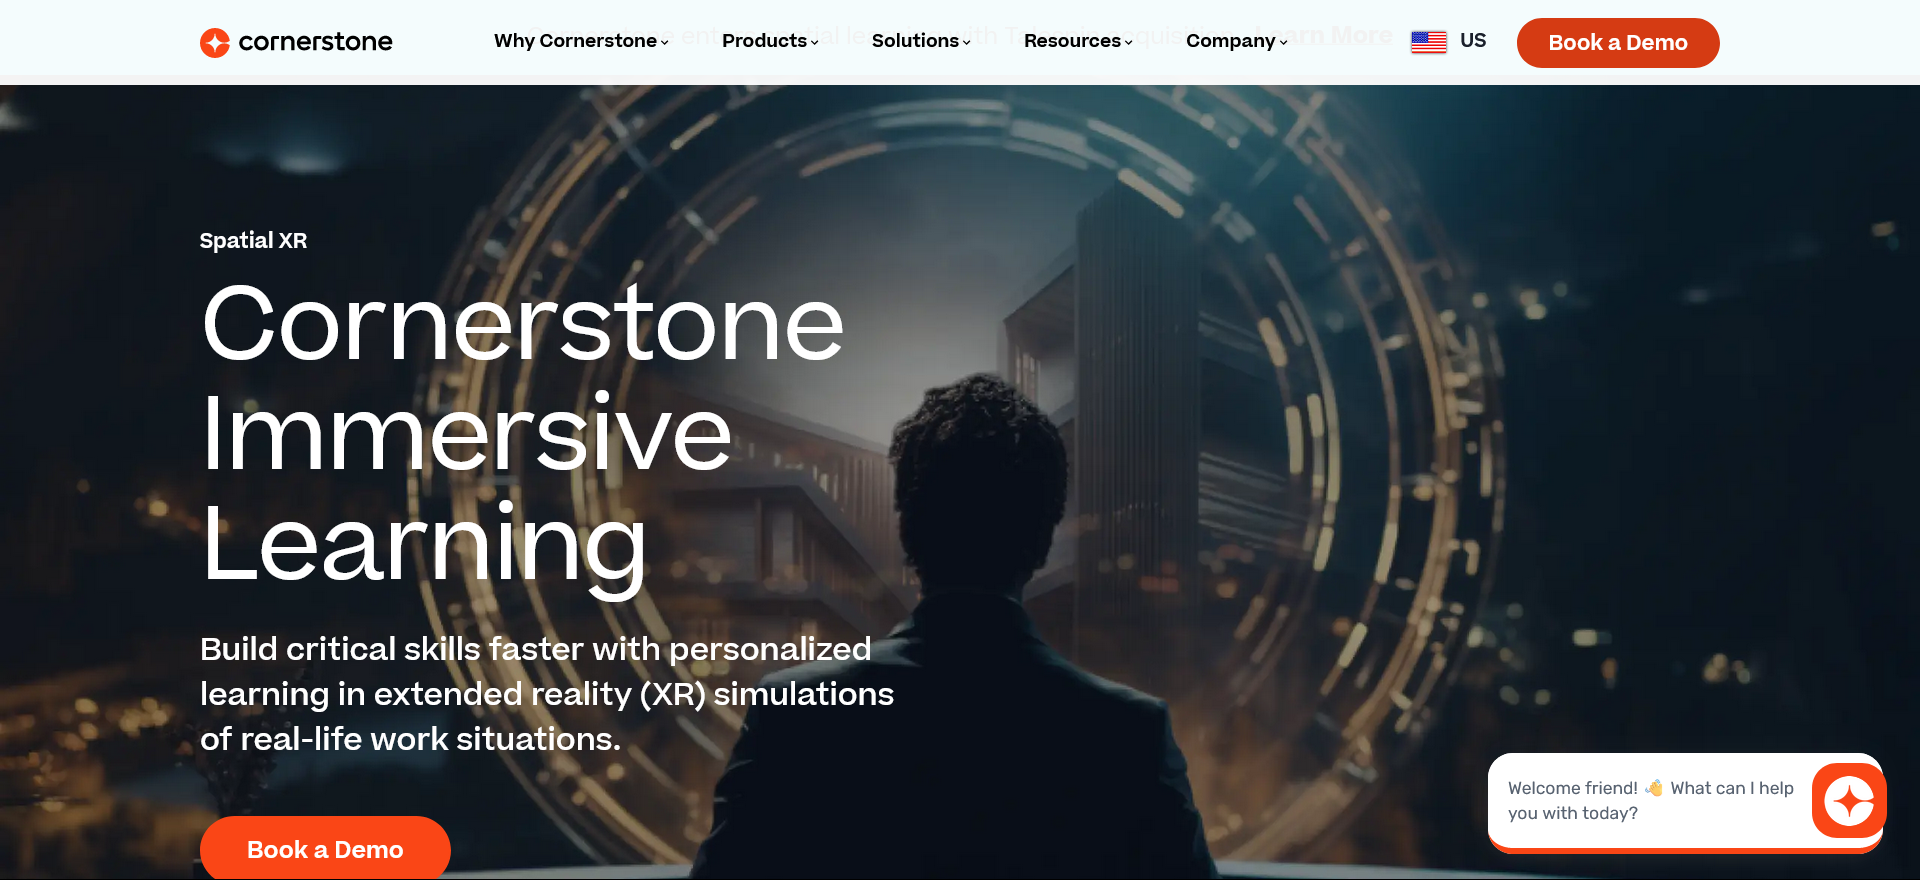 Cornerstone acquiert Talespin, une plateforme de formation immersive